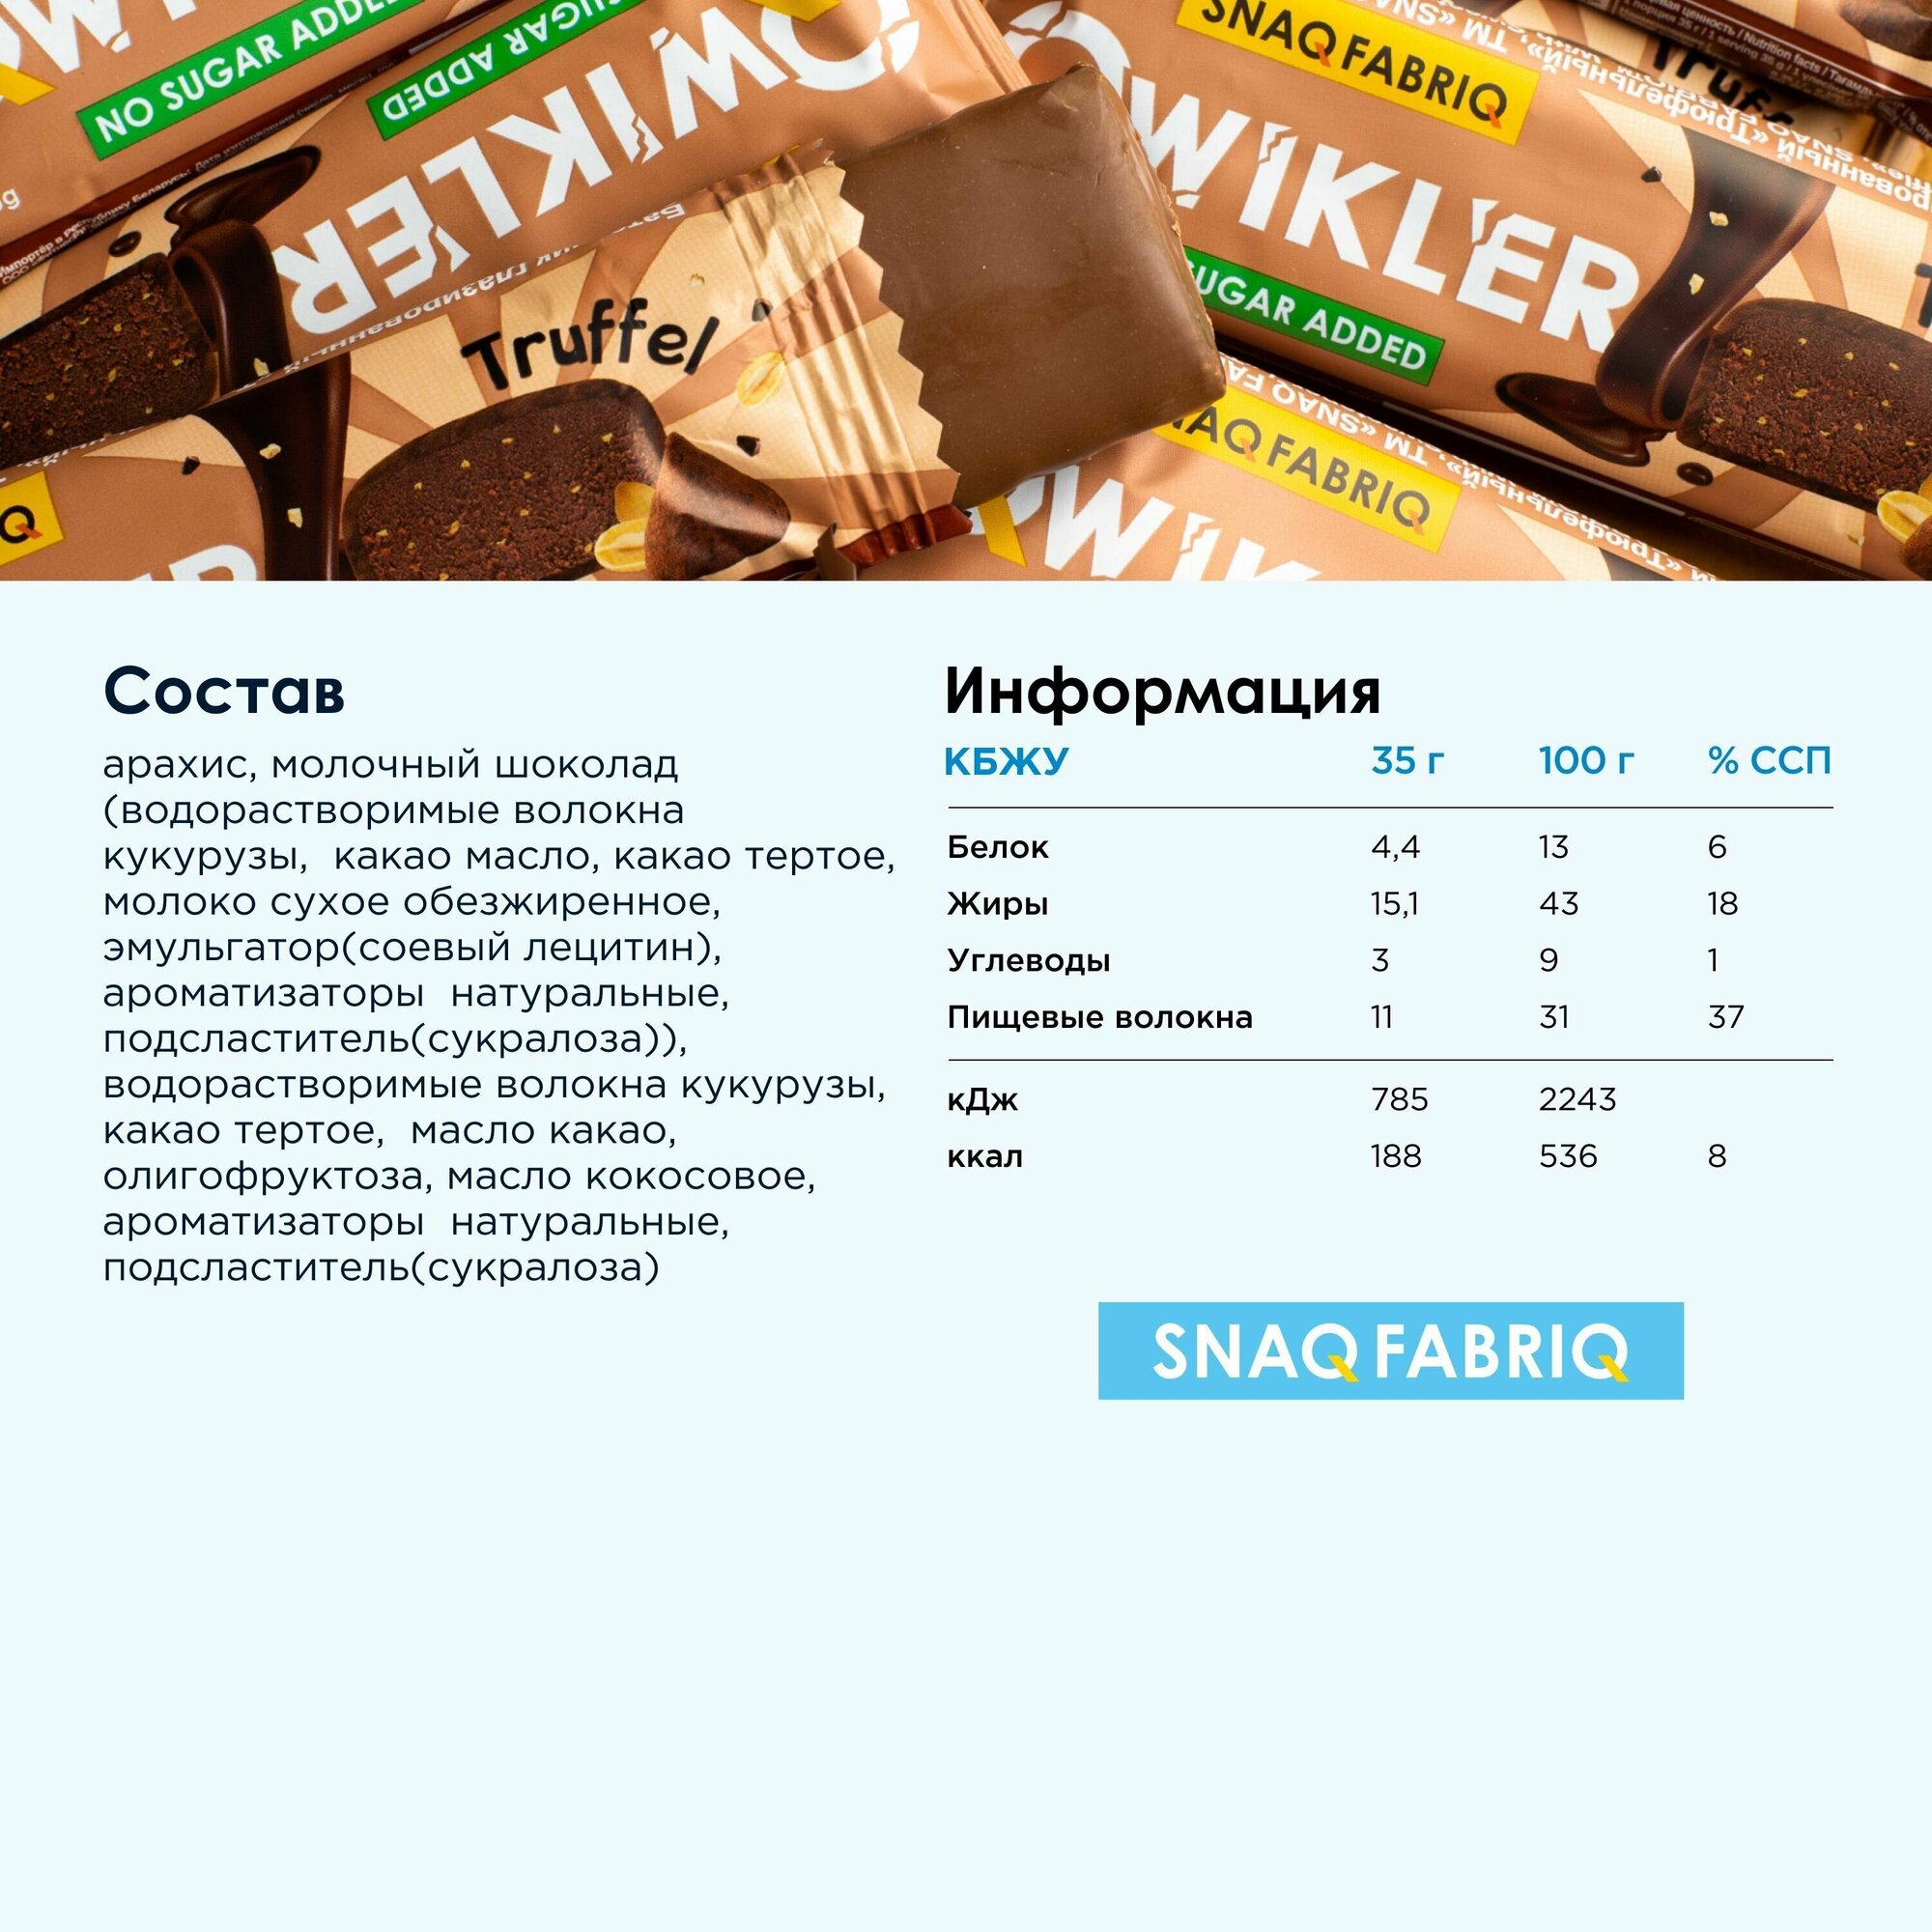 SNAQ FABRIQ Qwikler Батончик в шоколаде без сахара "Трюфель", 12шт х 35г - фотография № 2